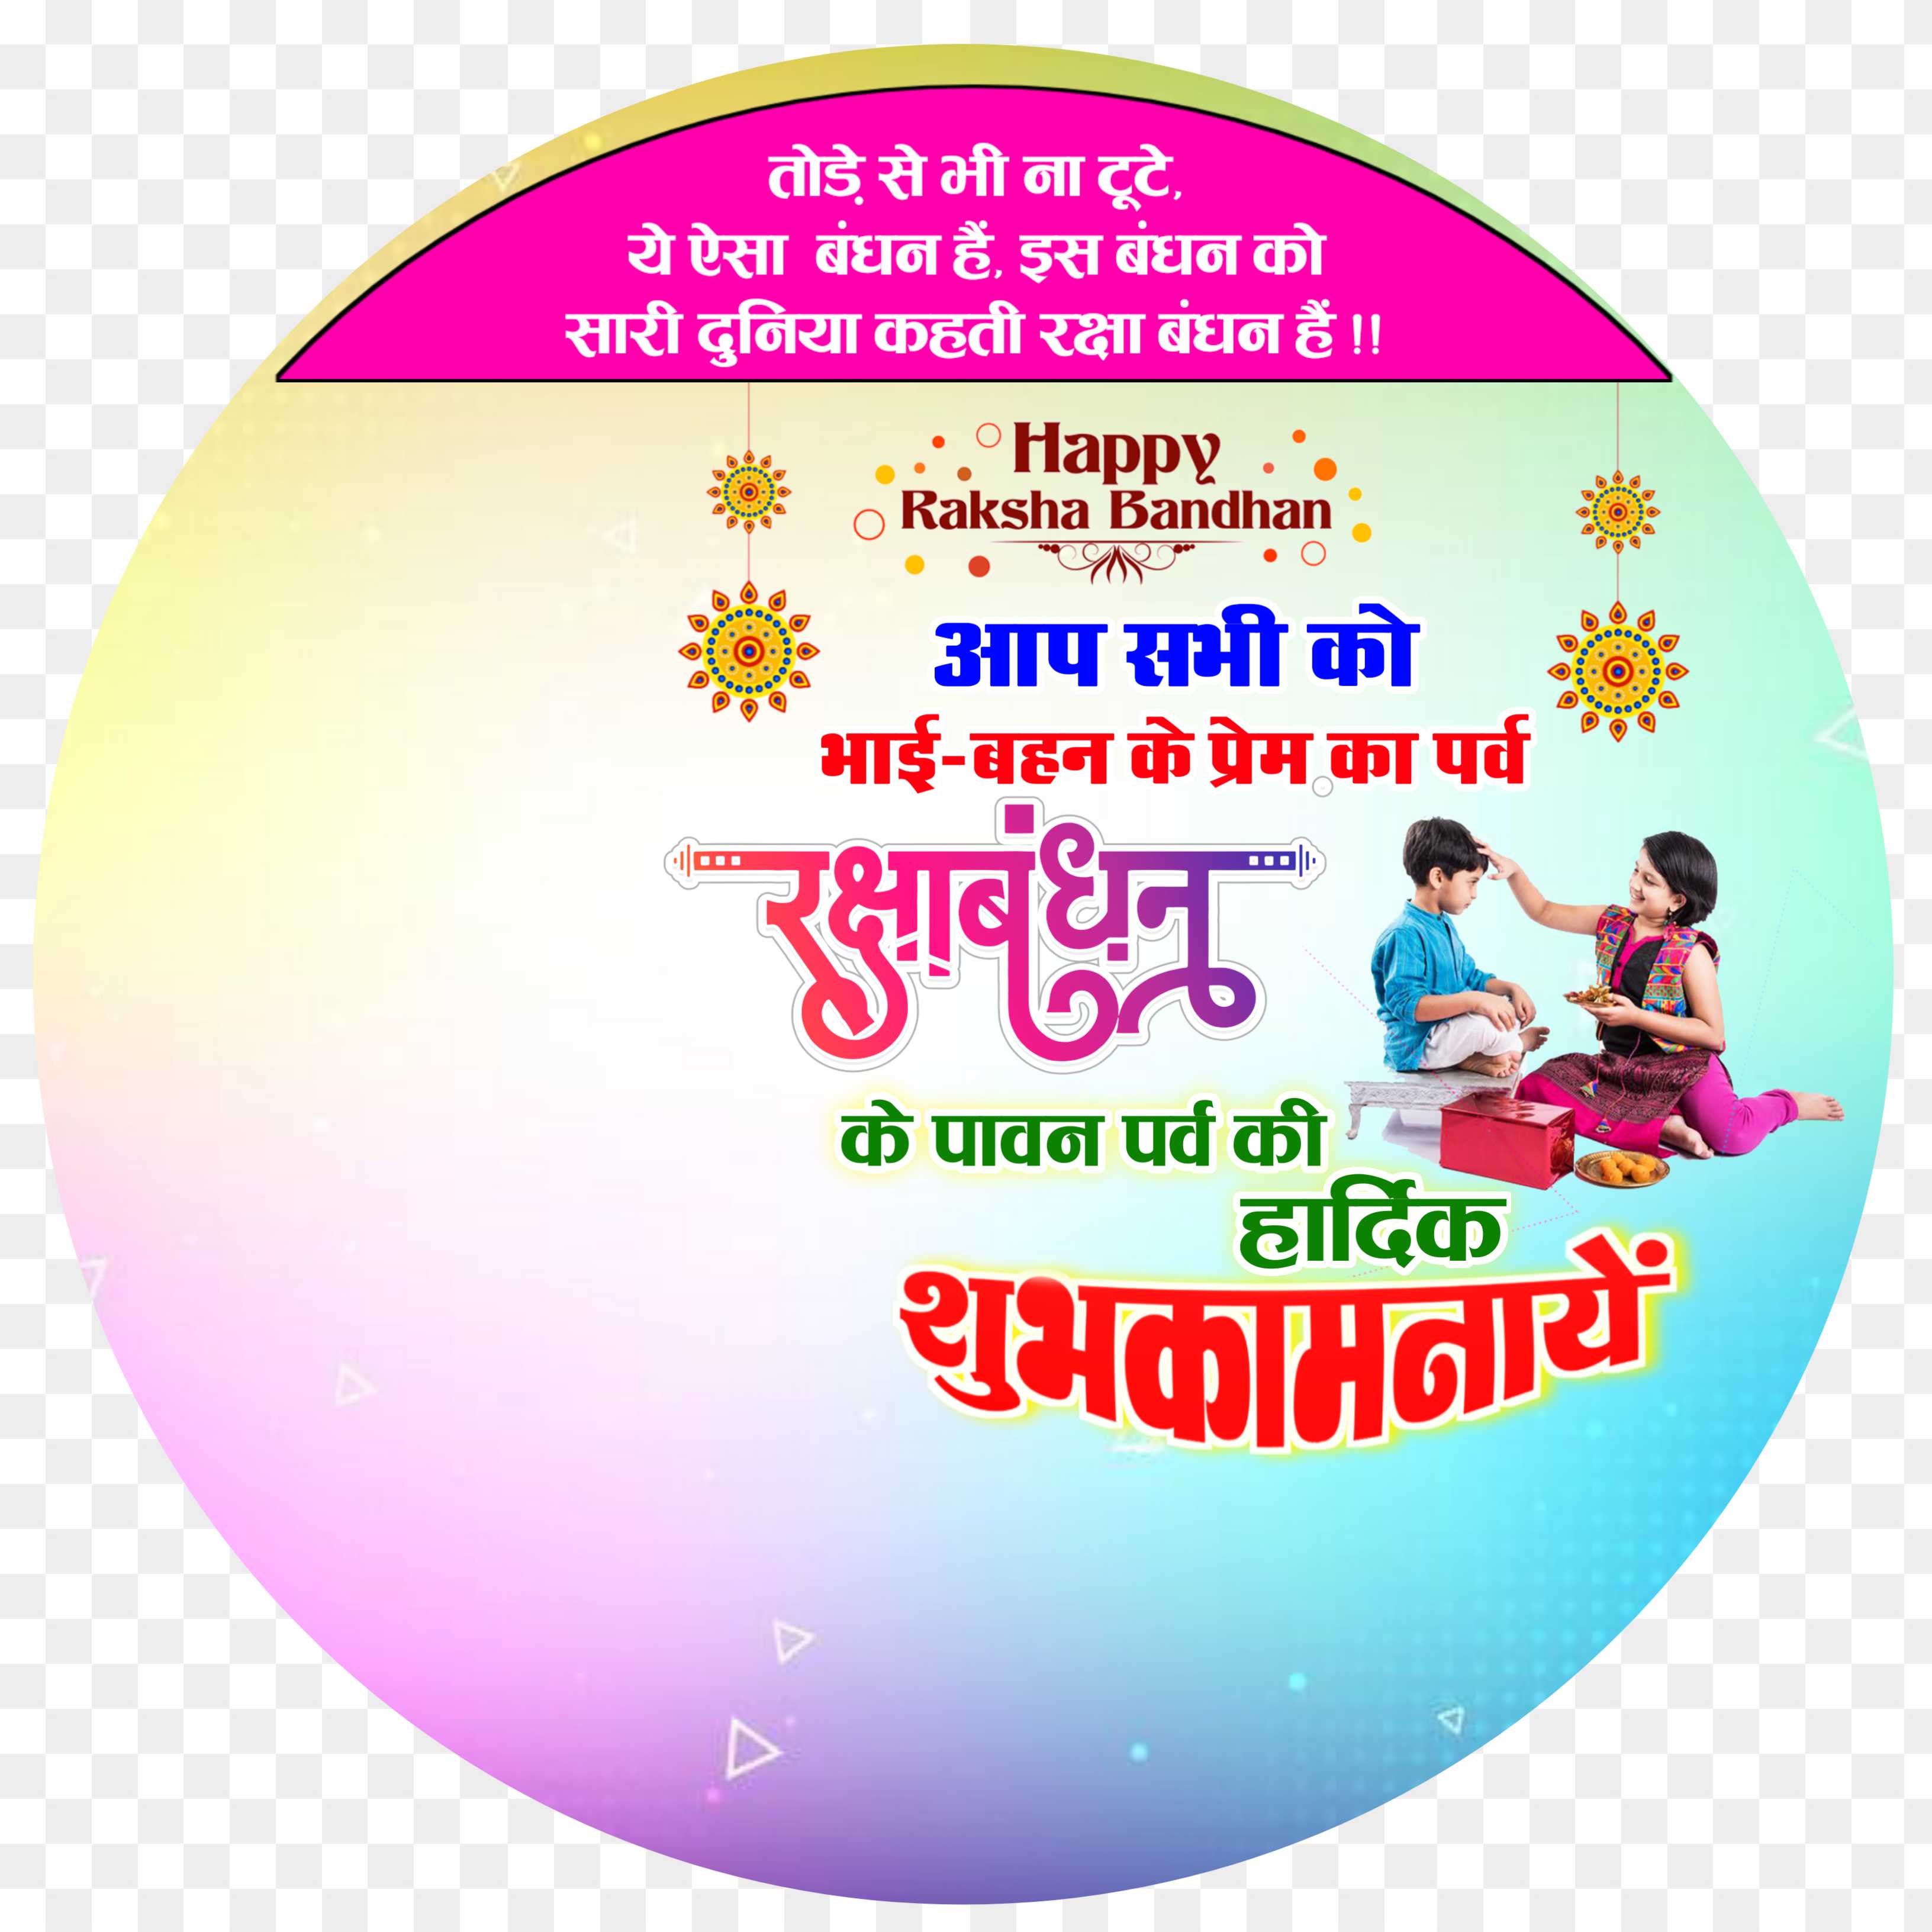 Happy Raksha Bandhan Sticker Greeting Design Illustration 26182823 Vector  Art at Vecteezy